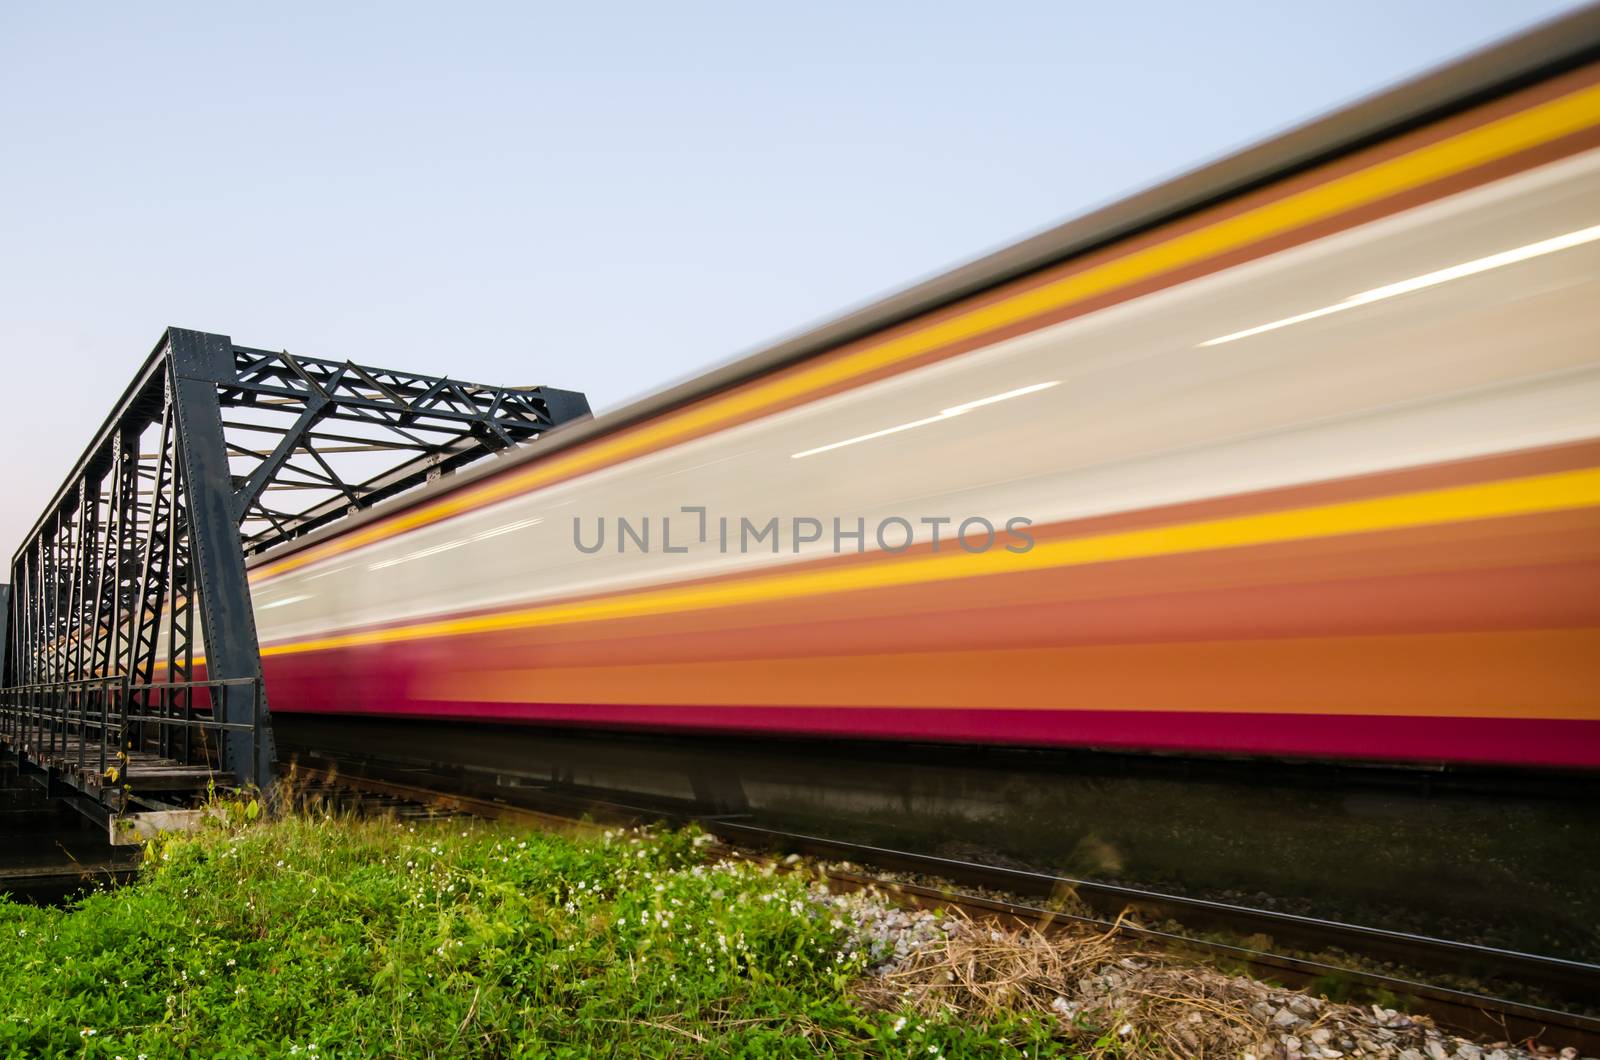 Trains run through the bridge with speed blur. by photobyphotoboy